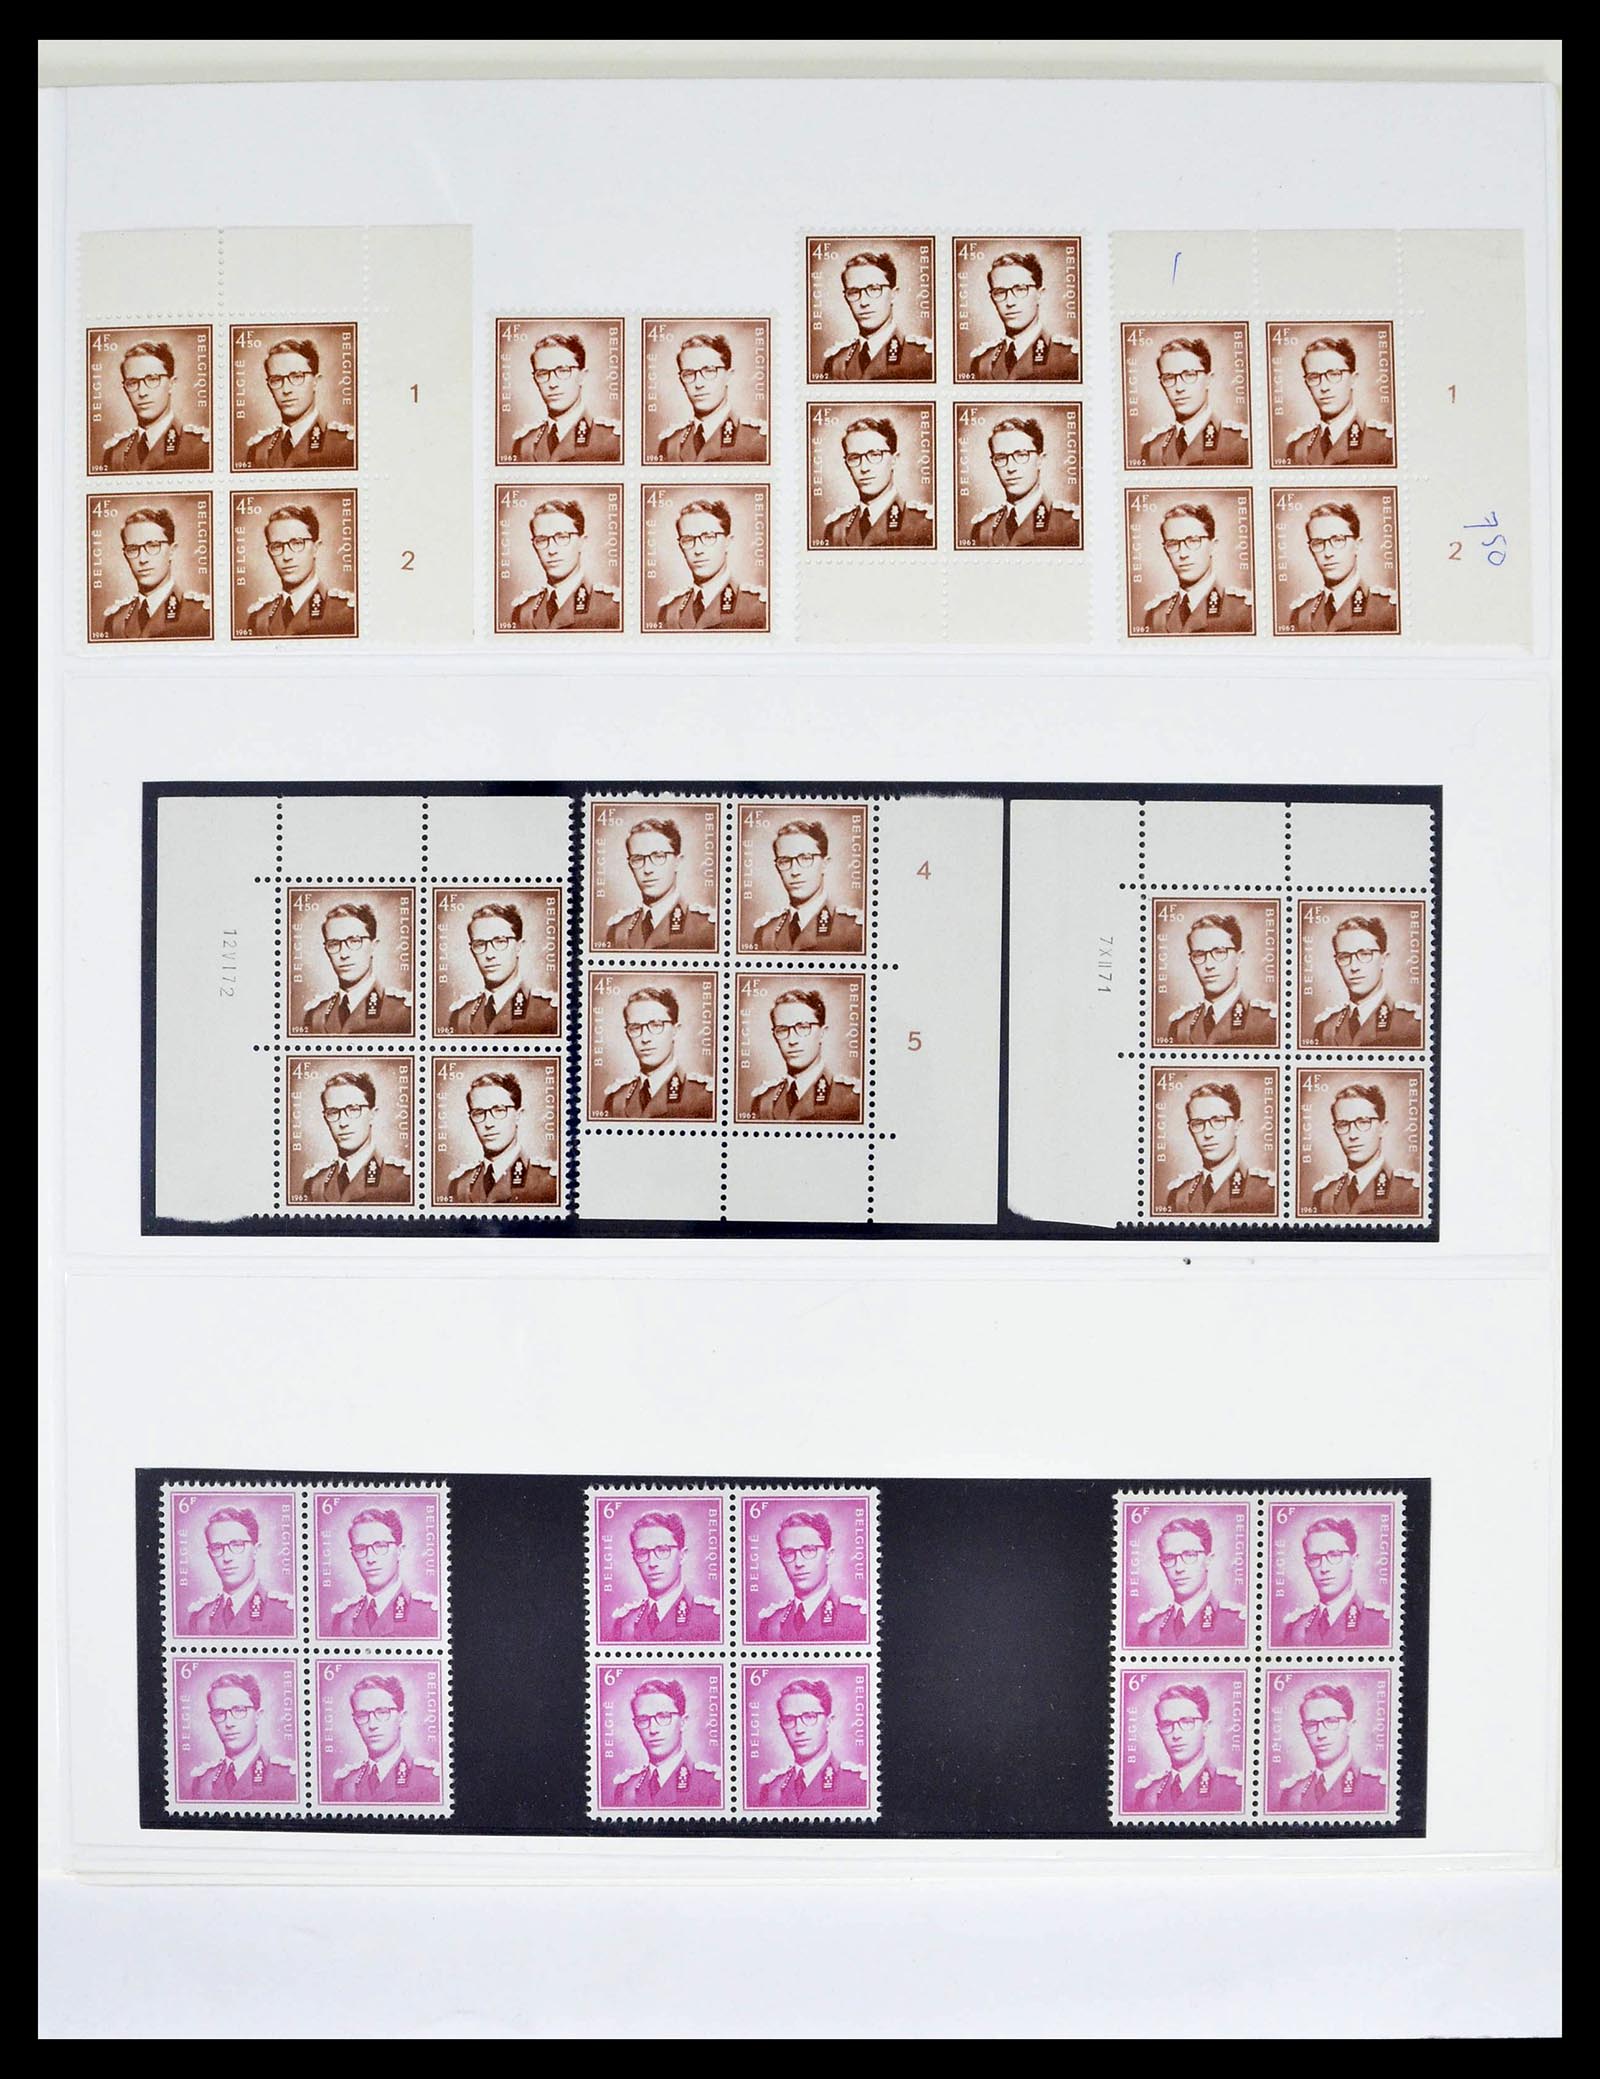 39229 0029 - Stamp collection 39229 Belgium Boudewijn with glasses 1952-1975.